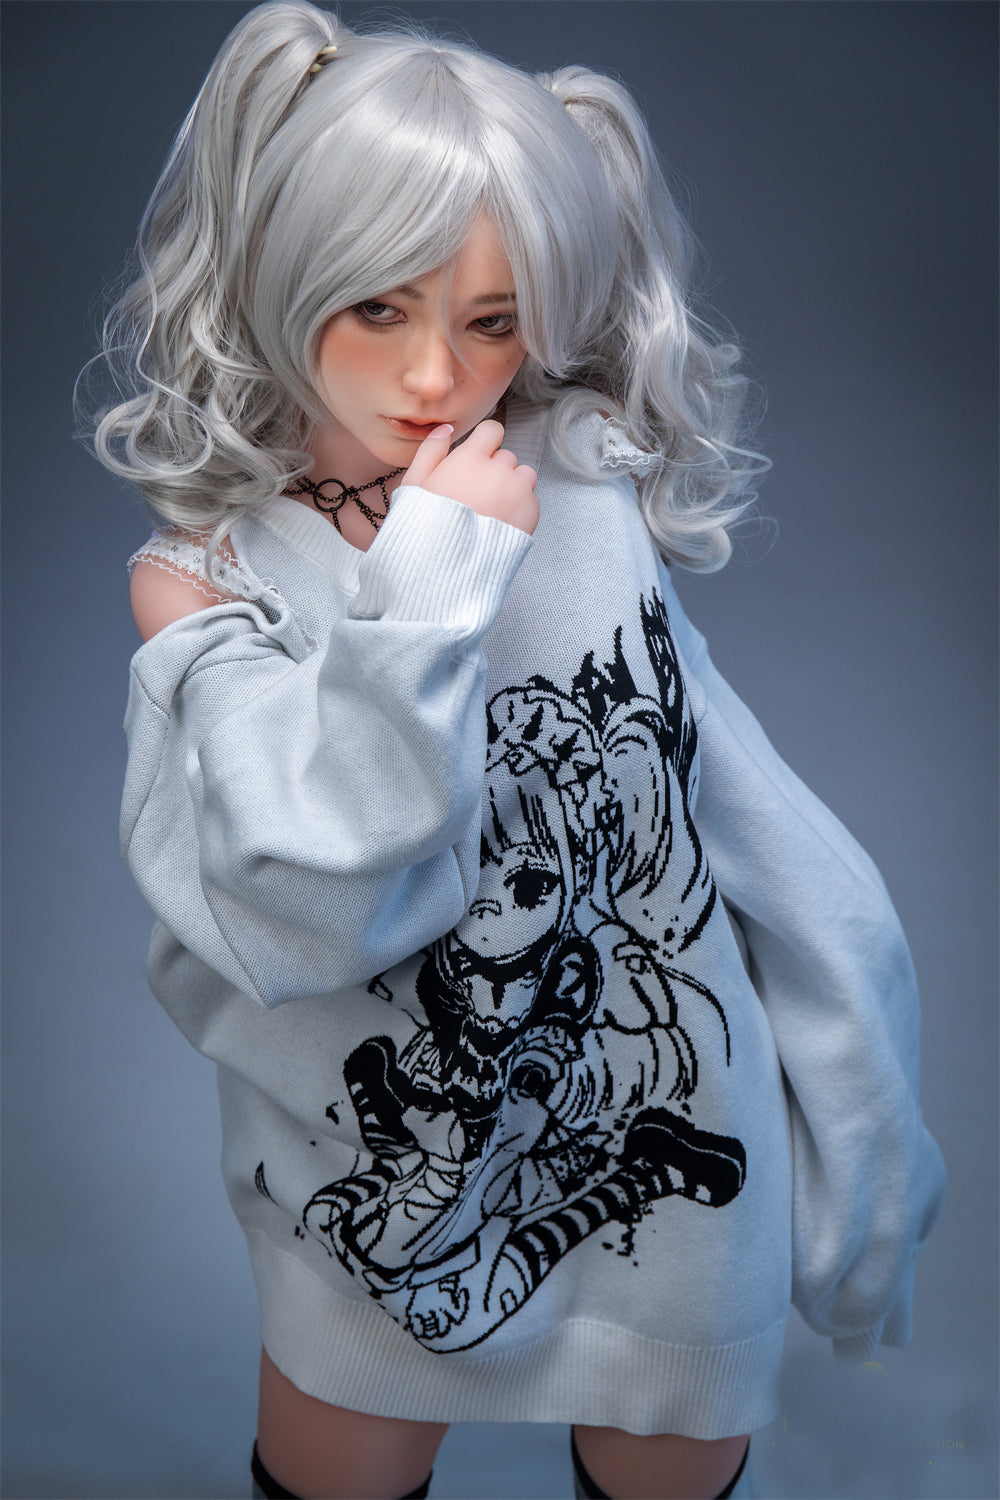 CheeronDoll 154cm S10 Misa Hybrid Sex Doll Silicone Head and TPE body doll Hybrid anime Girl